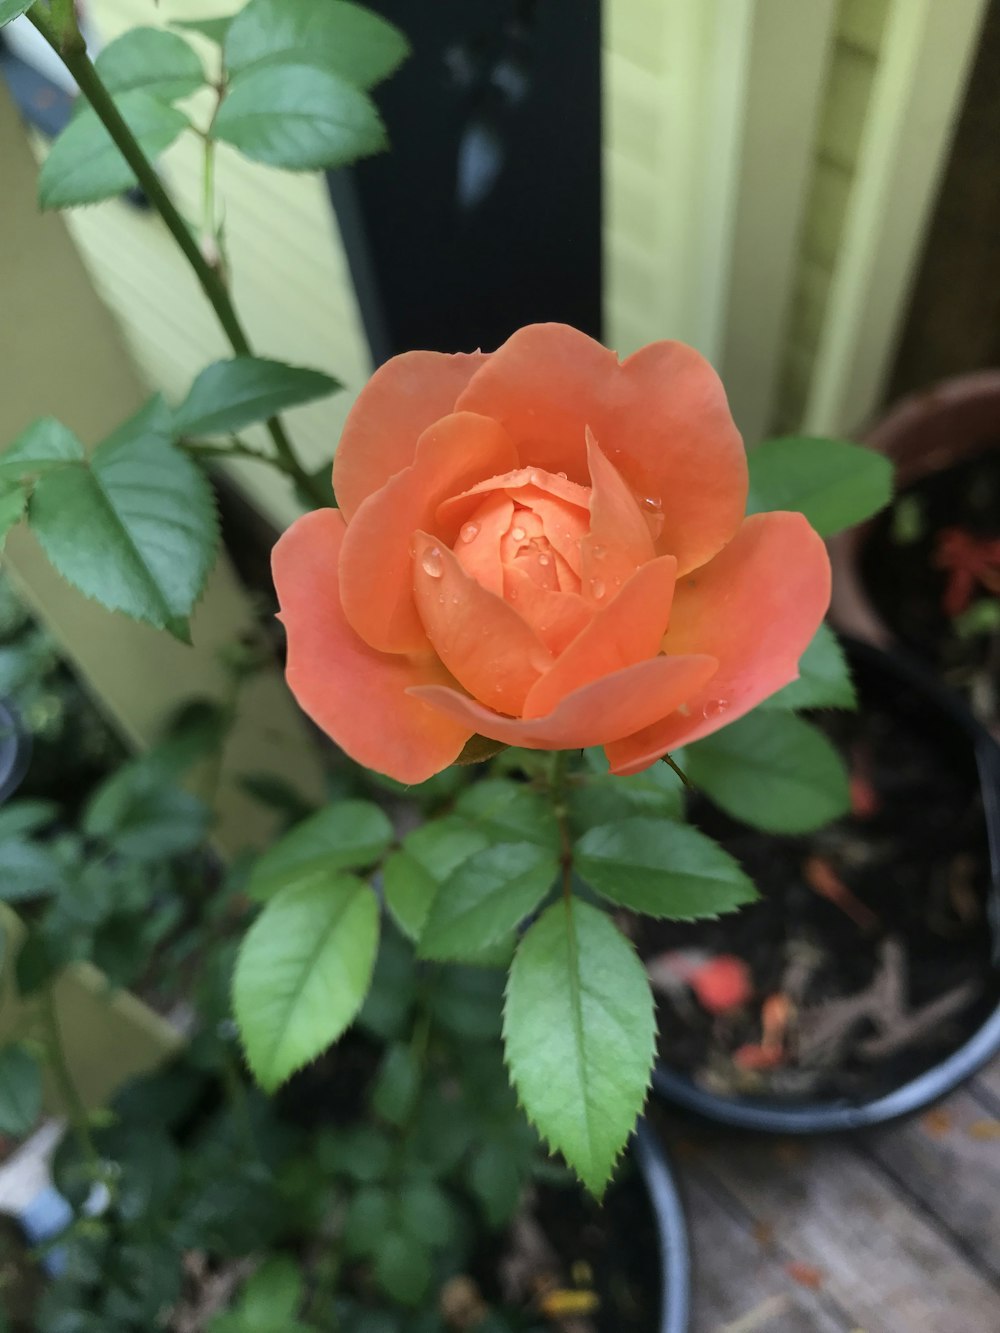 an orange rose in a pot on a porch